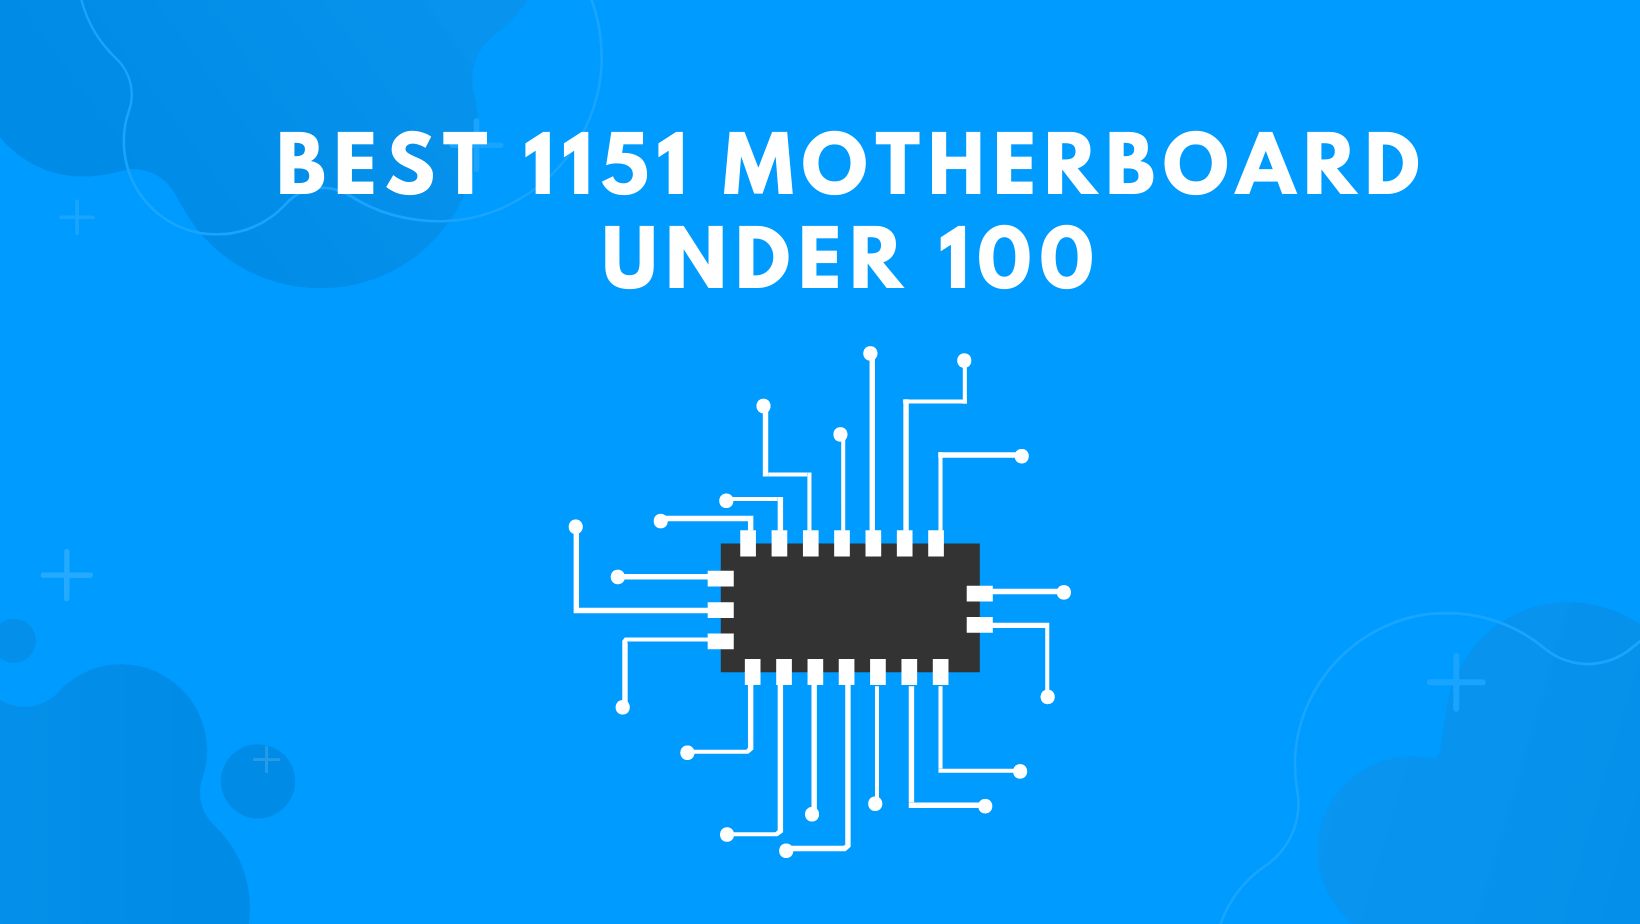 Best 1151 Motherboard Under 100